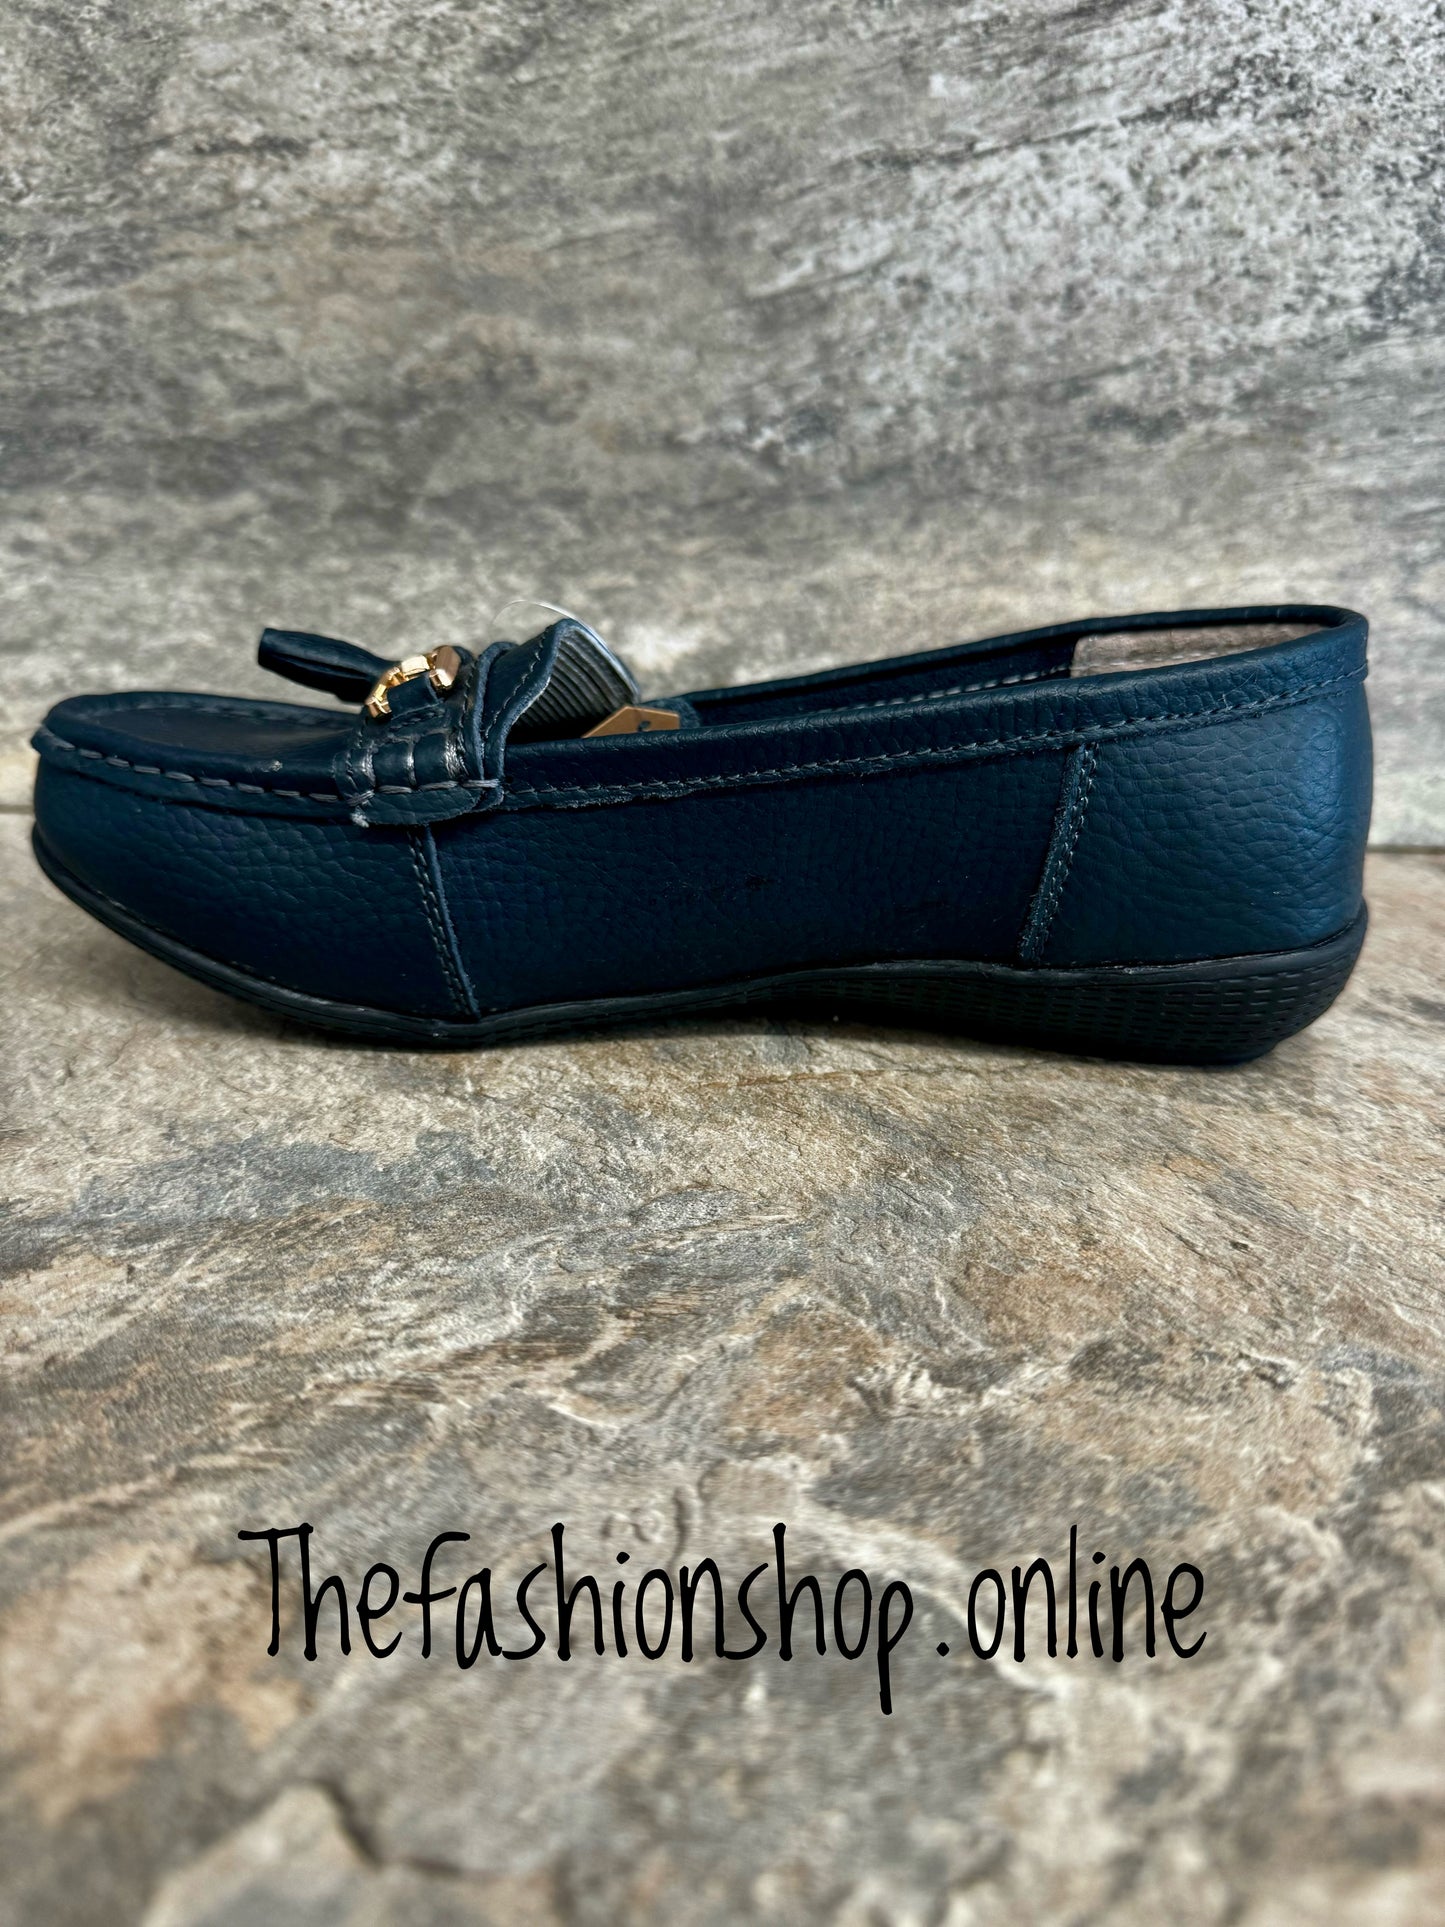 Jo & Joe Nautical wide fit dark navy leather loafer sizes 4-8